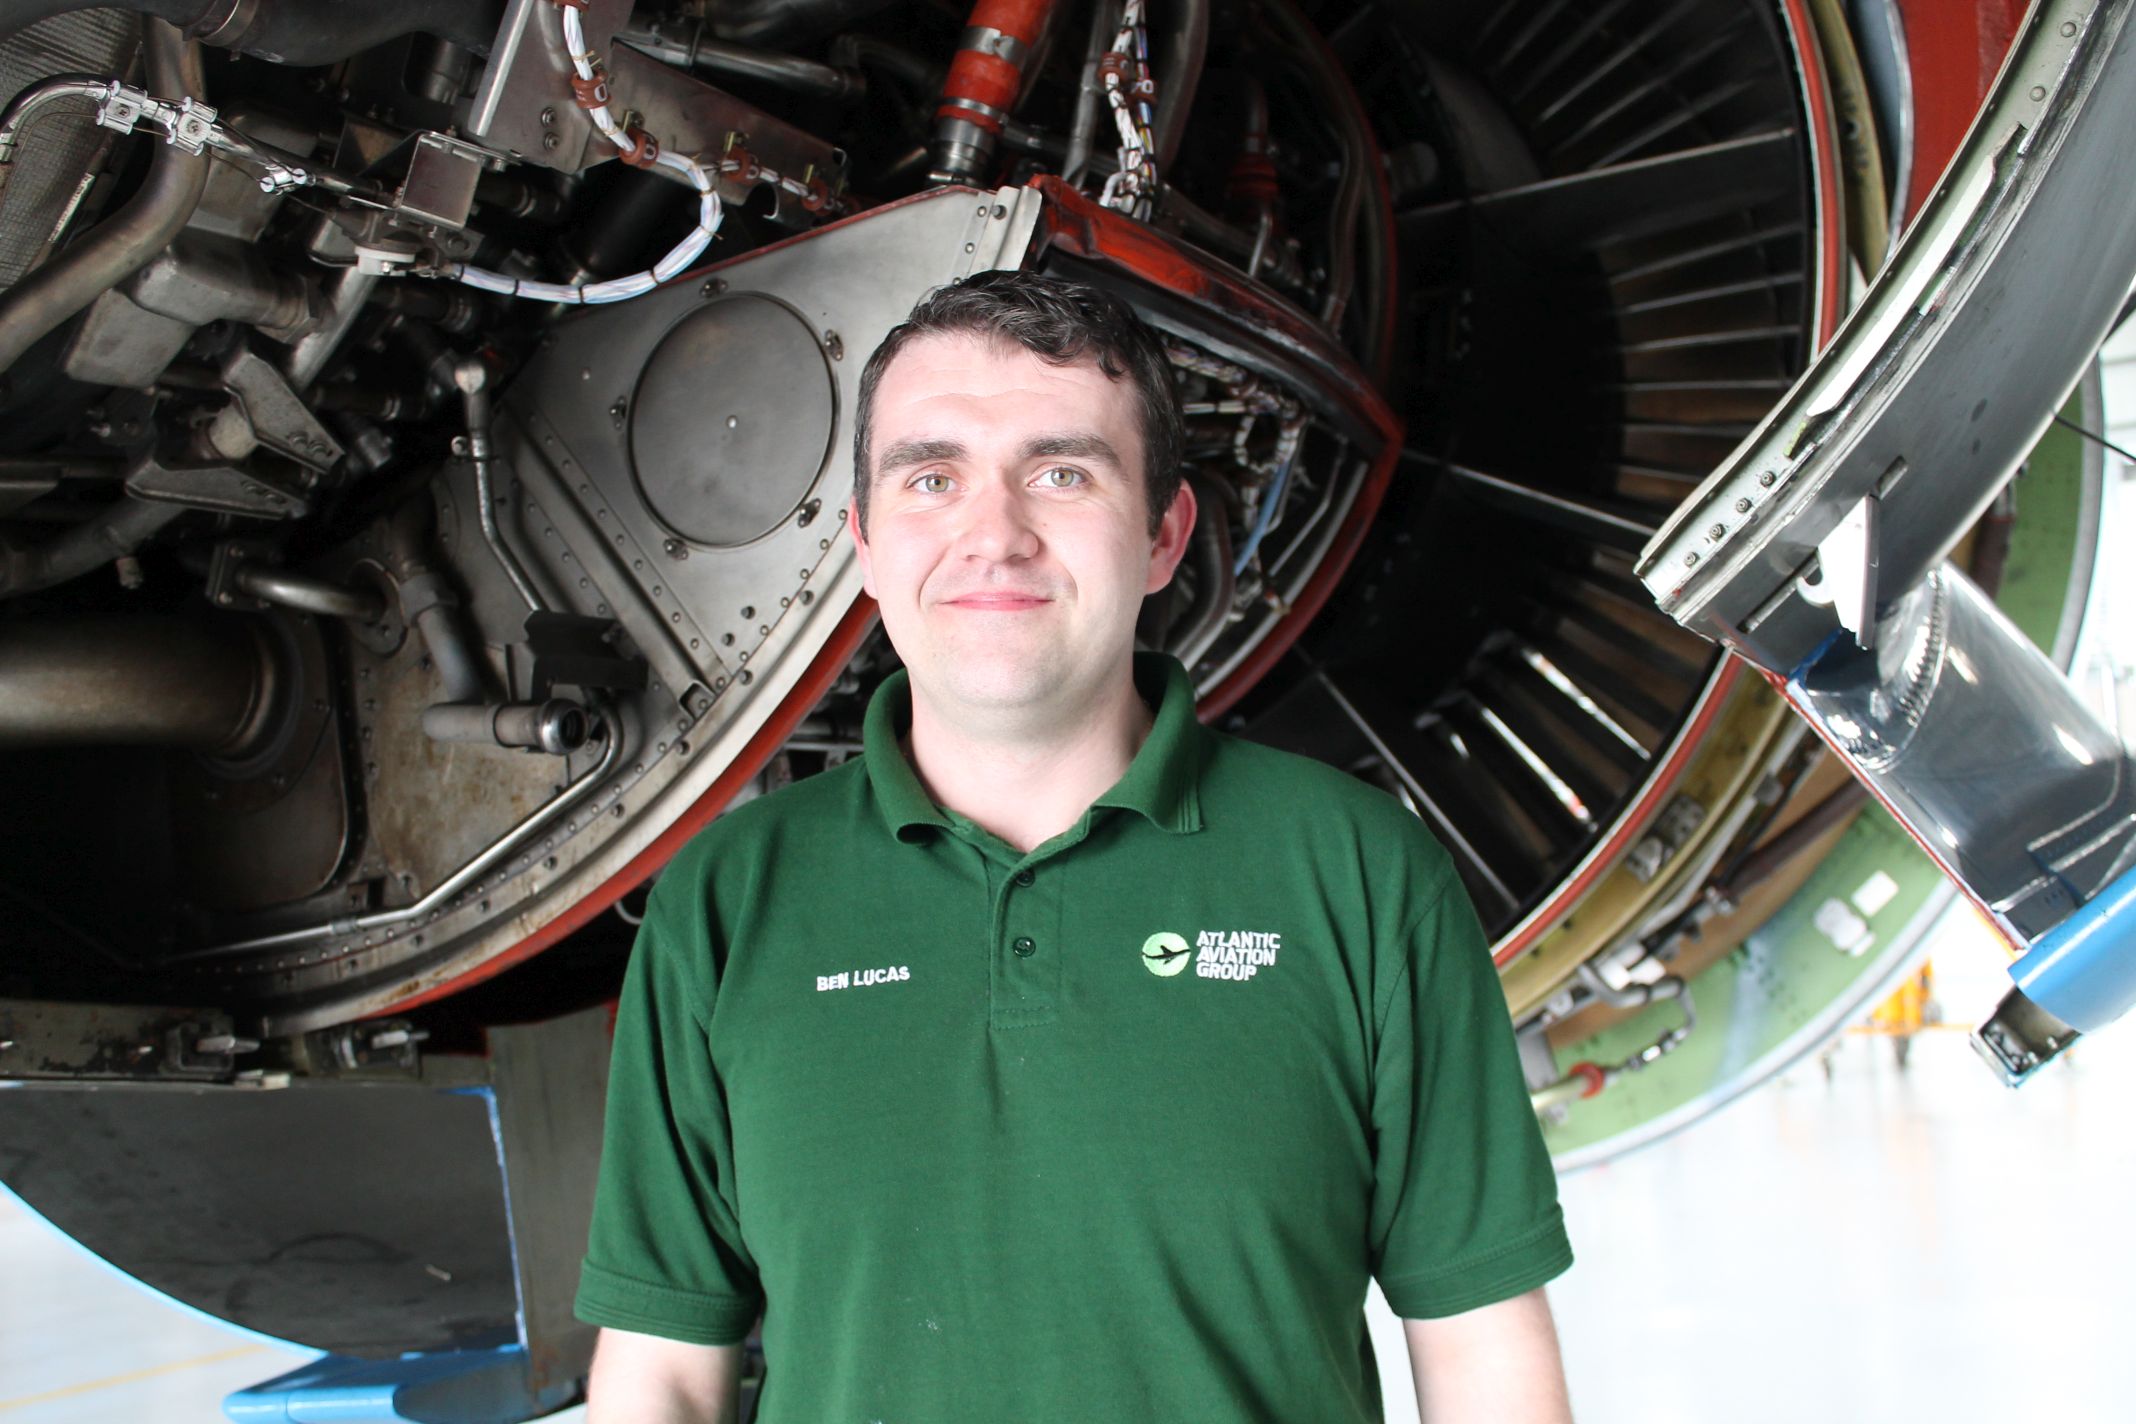 Ben Lucas winner of the IrelandSkills competition for Aircraft Maintenance